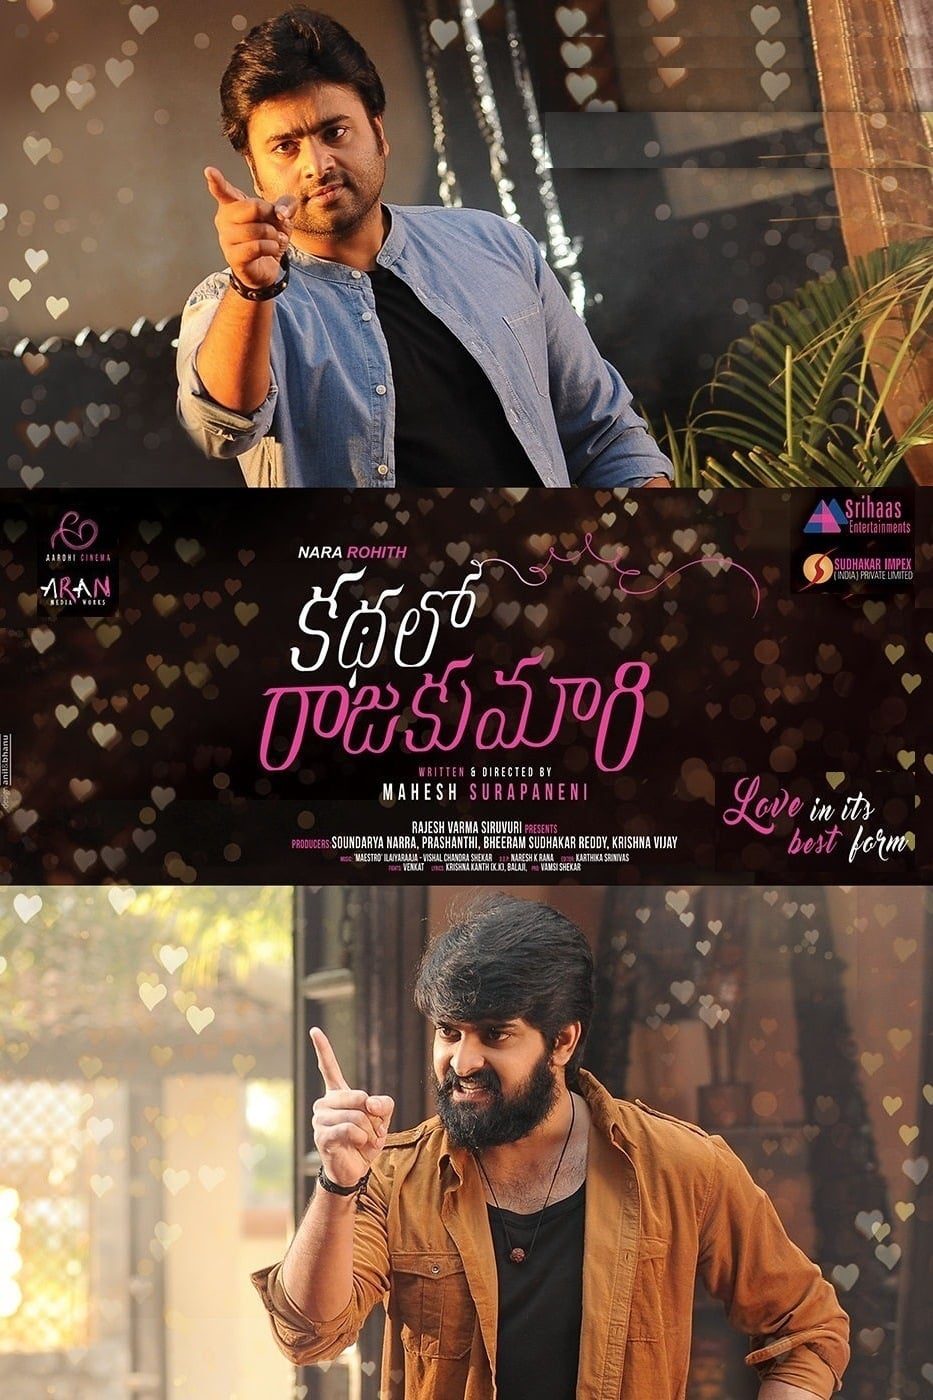 Poster for the movie "Kathalo Rajakumari"